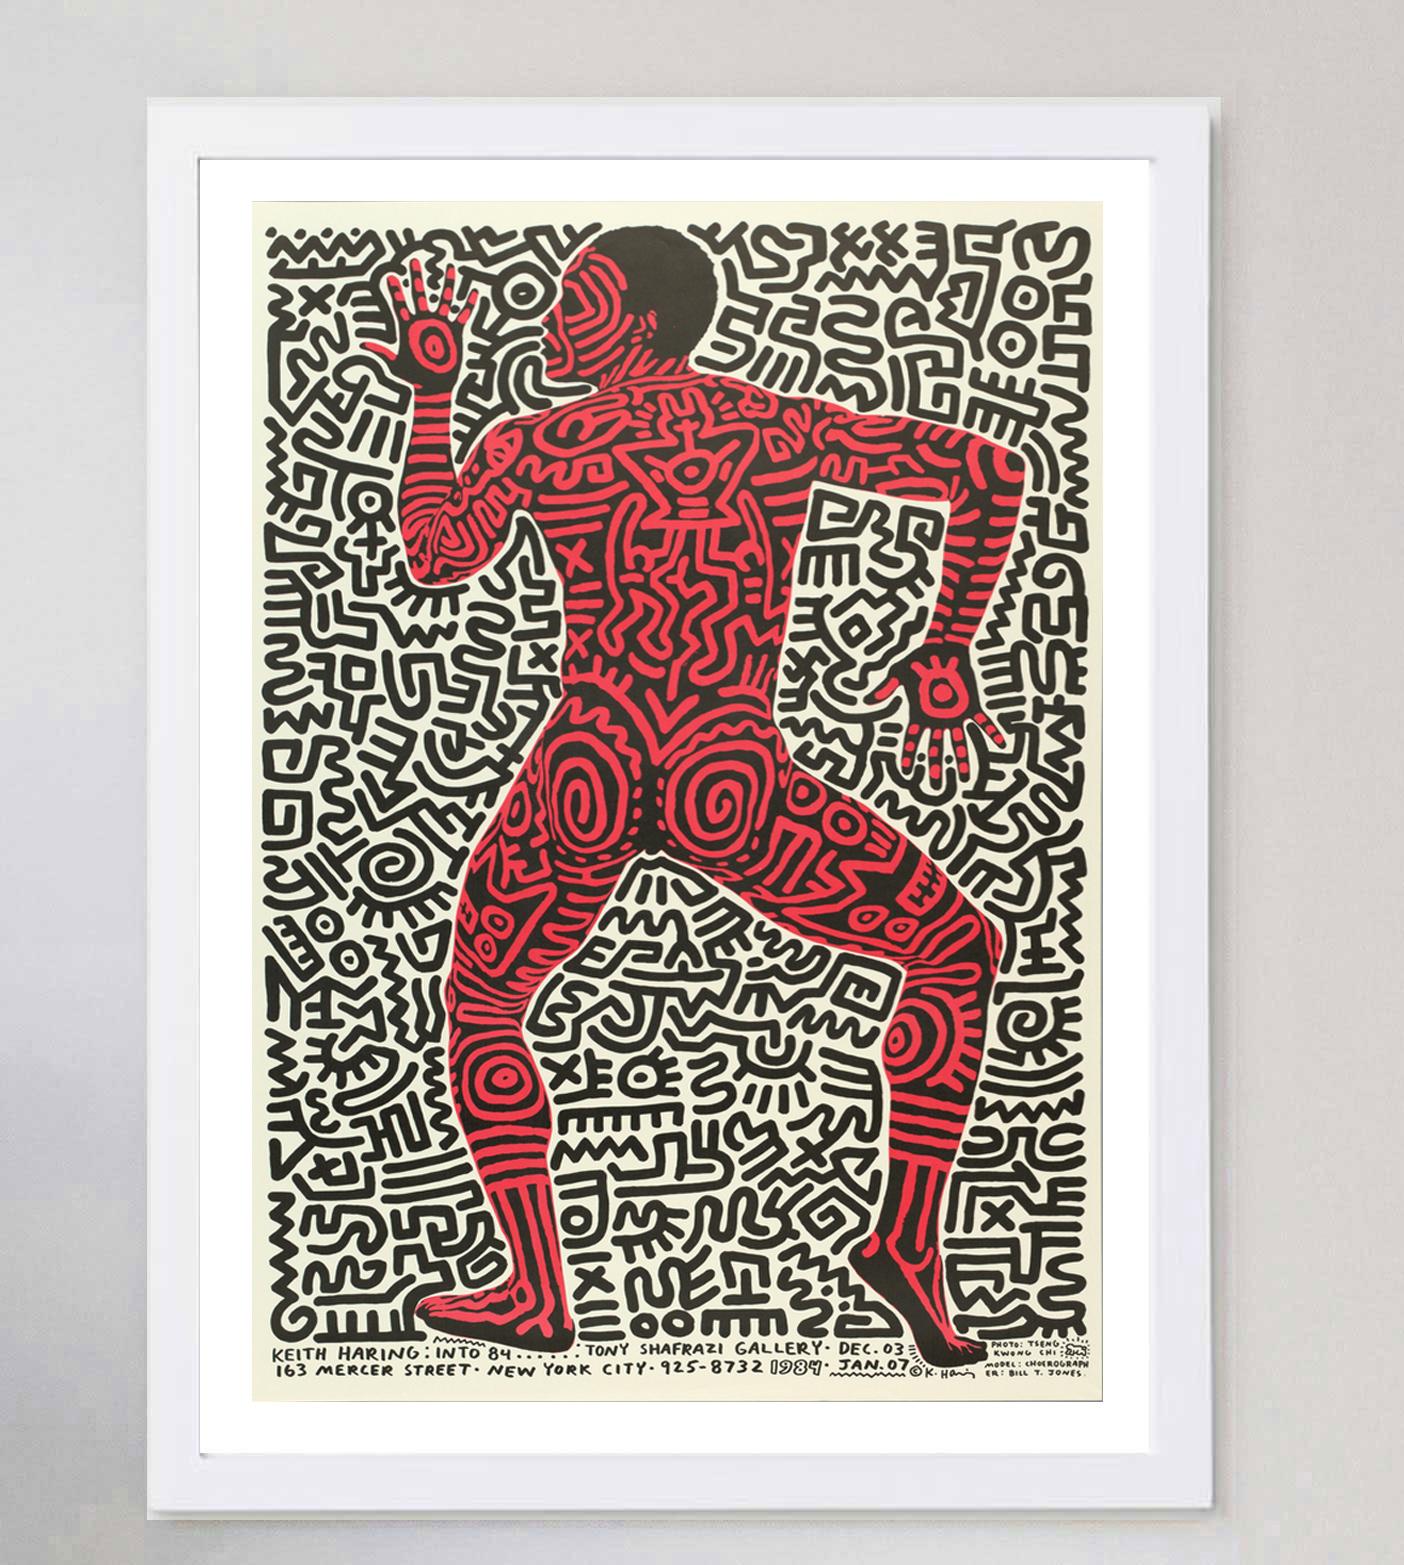 American 1983 Keith Haring, Into 84 Original Vintage Poster